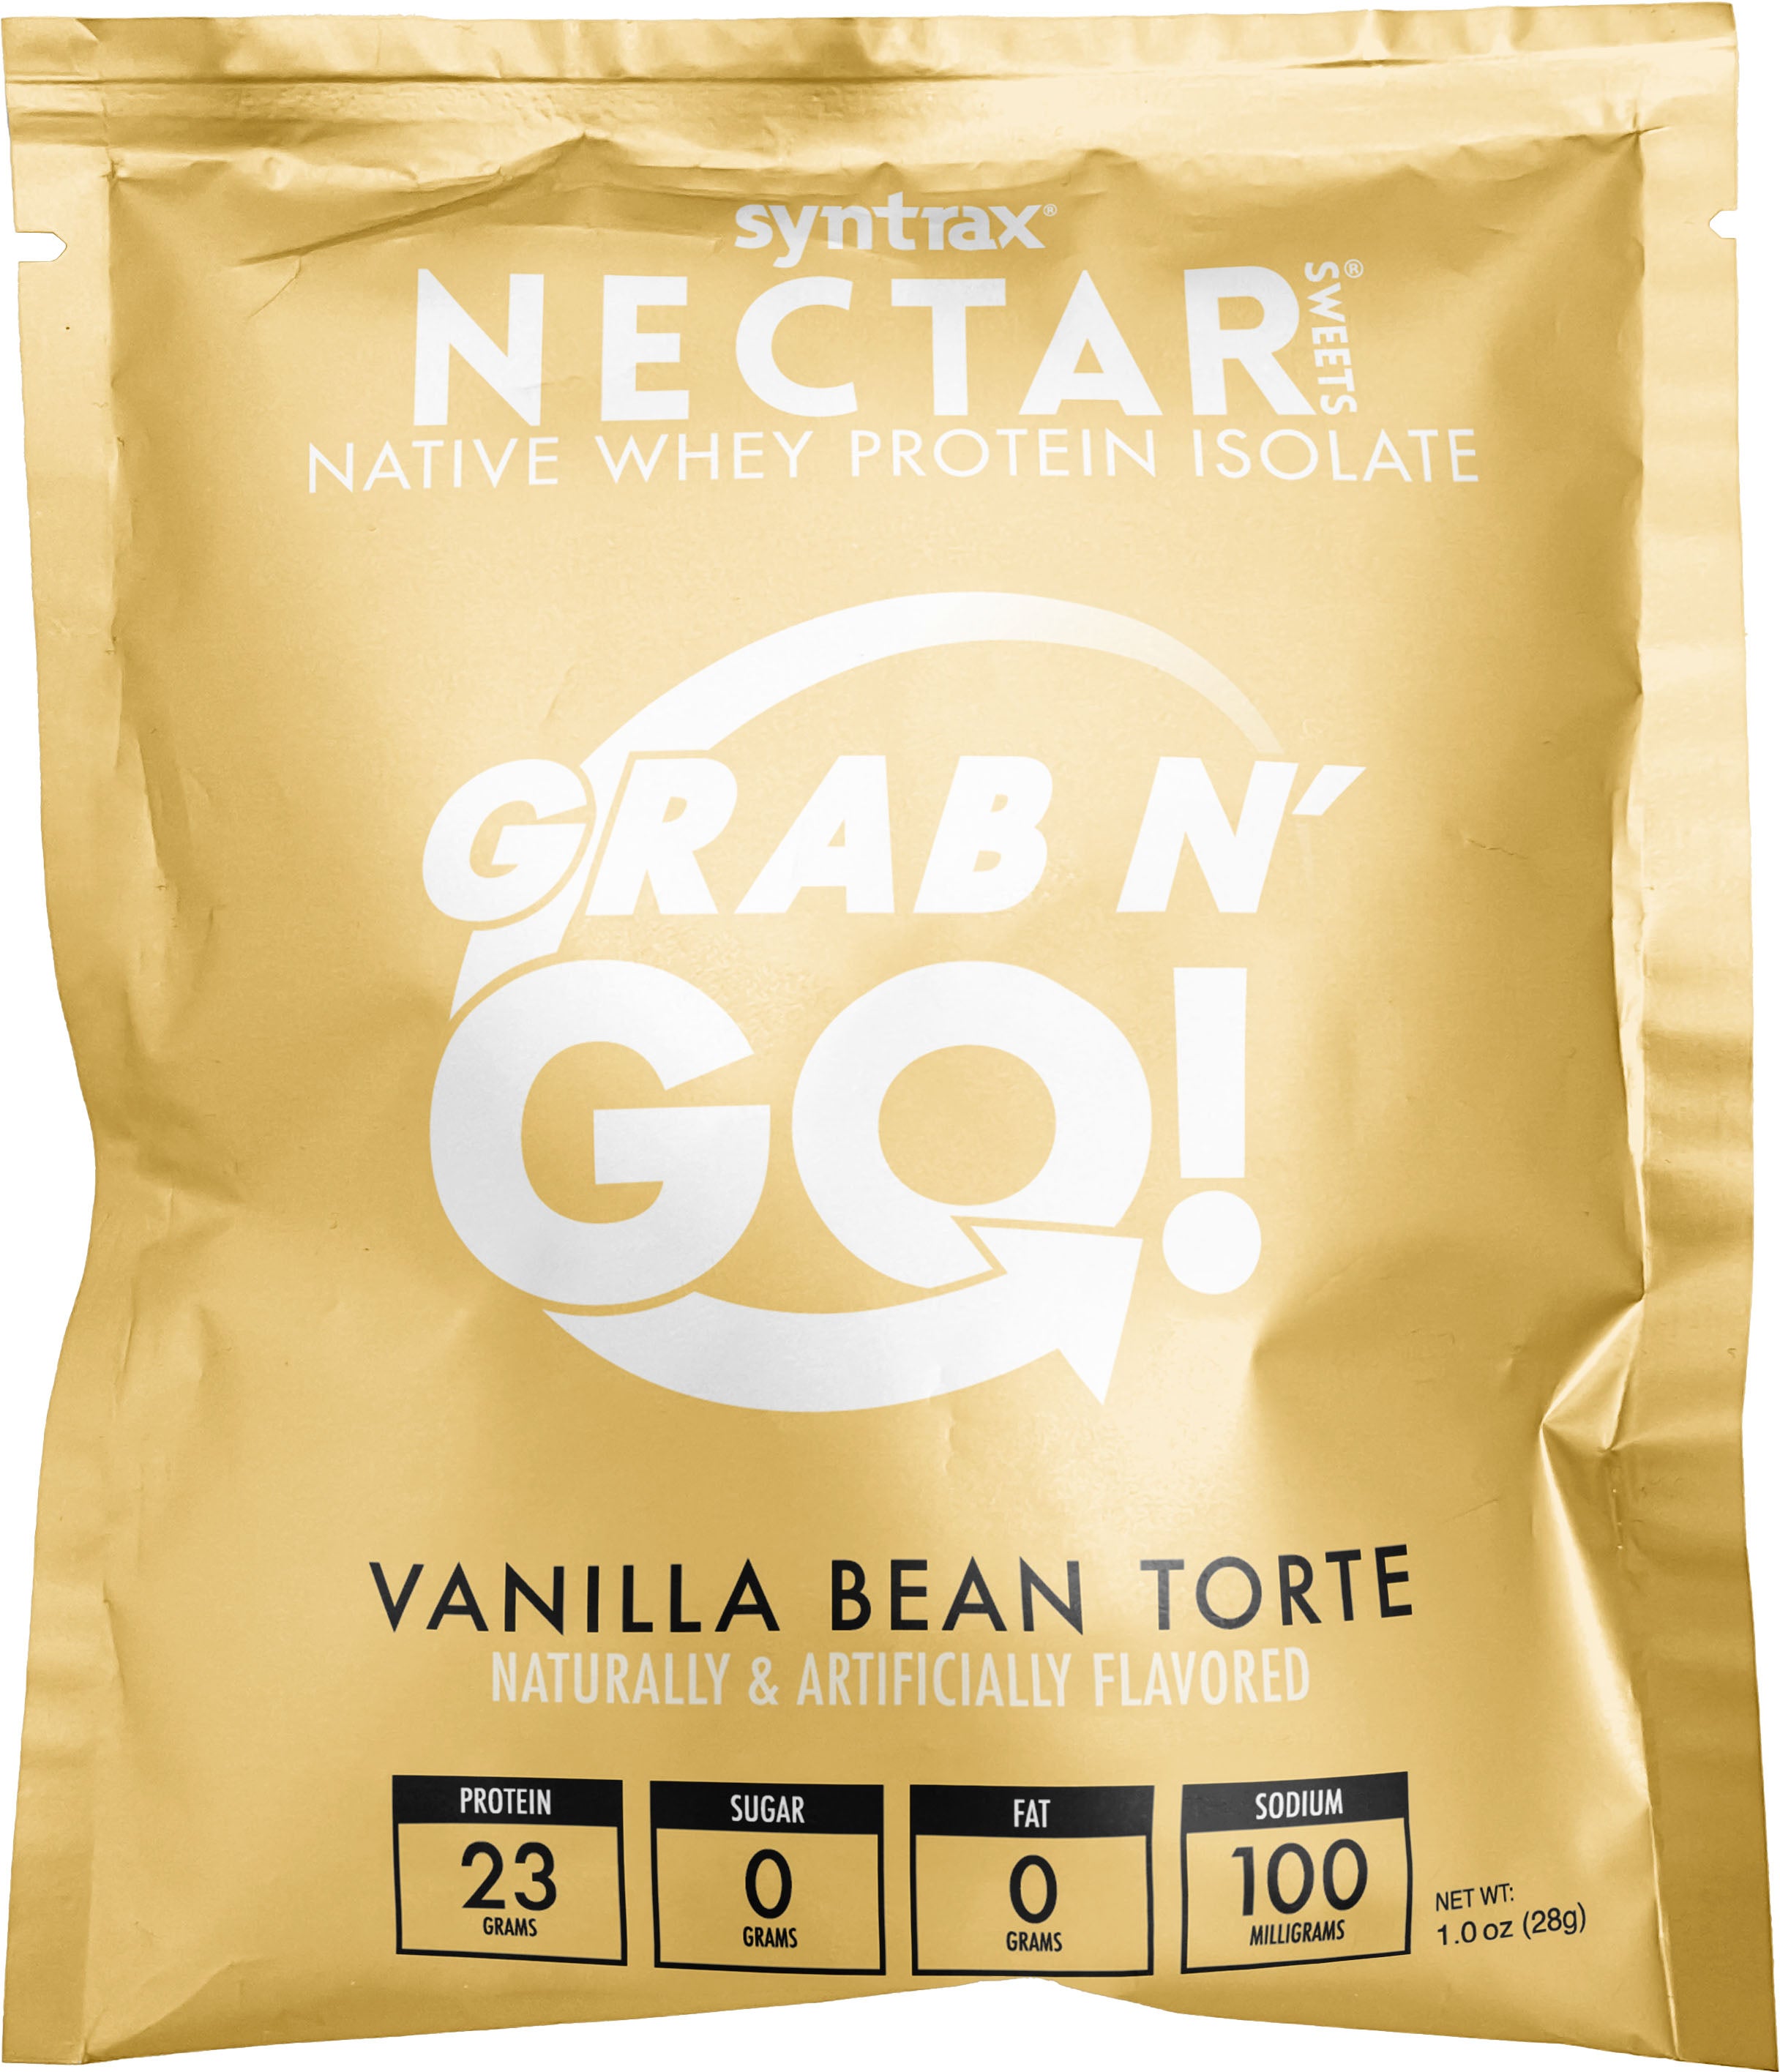 Syntrax Nectar Protein Powder Grab N' Go Box - Vanilla Bean